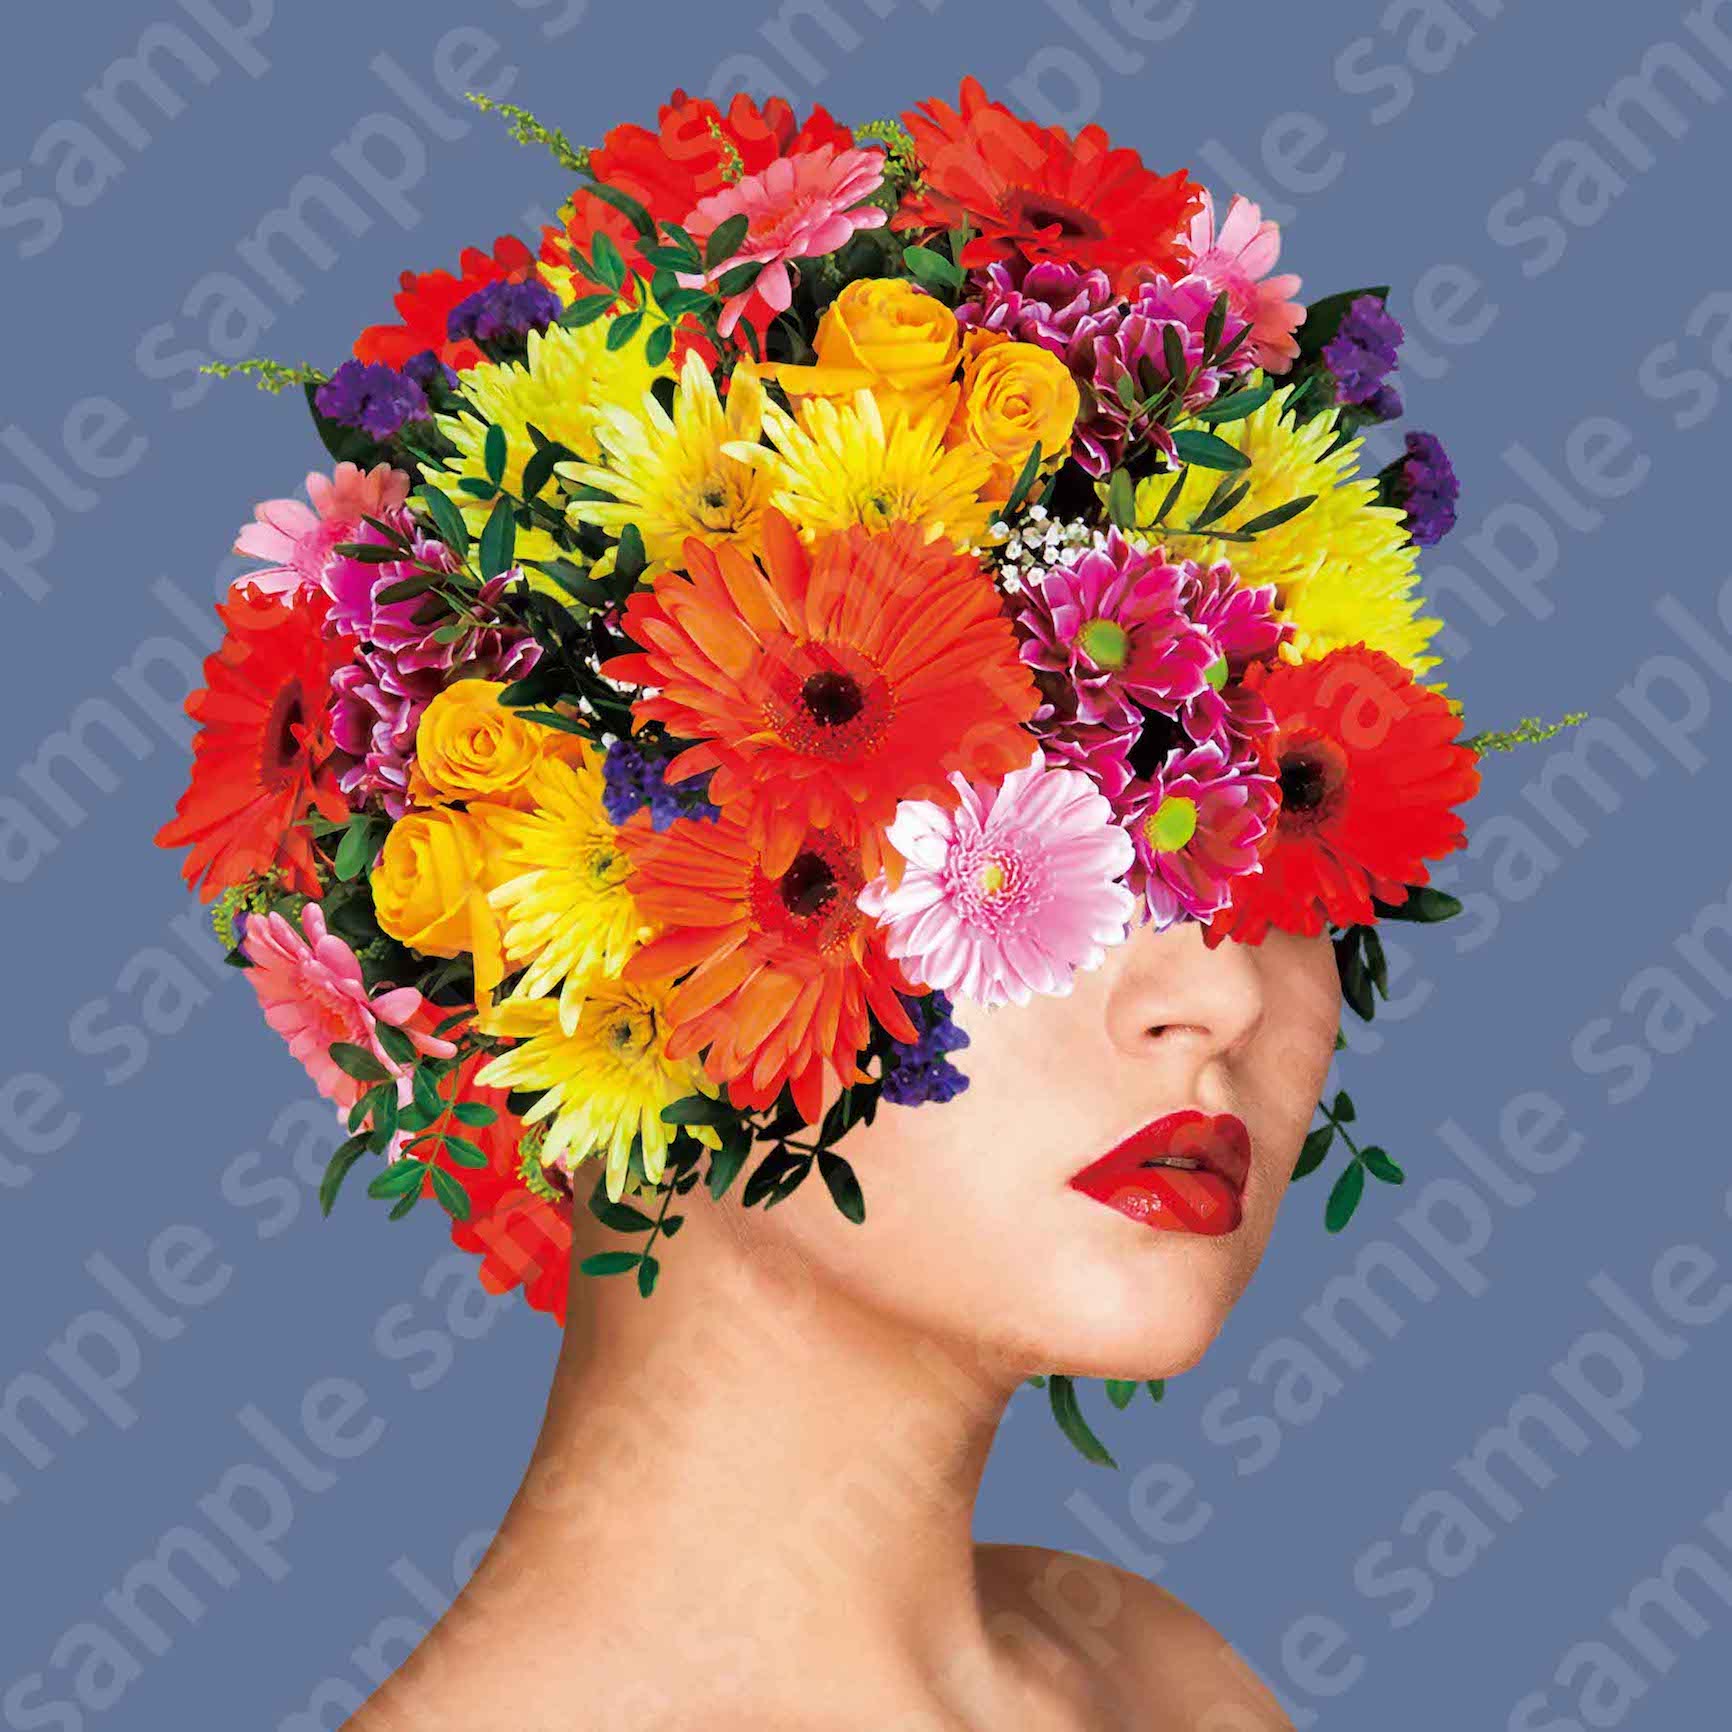 HEAD FULL OF FLOWERS - TOMARI MIYA IMPRESSION D'ART SUR CANVAS 40 "x40